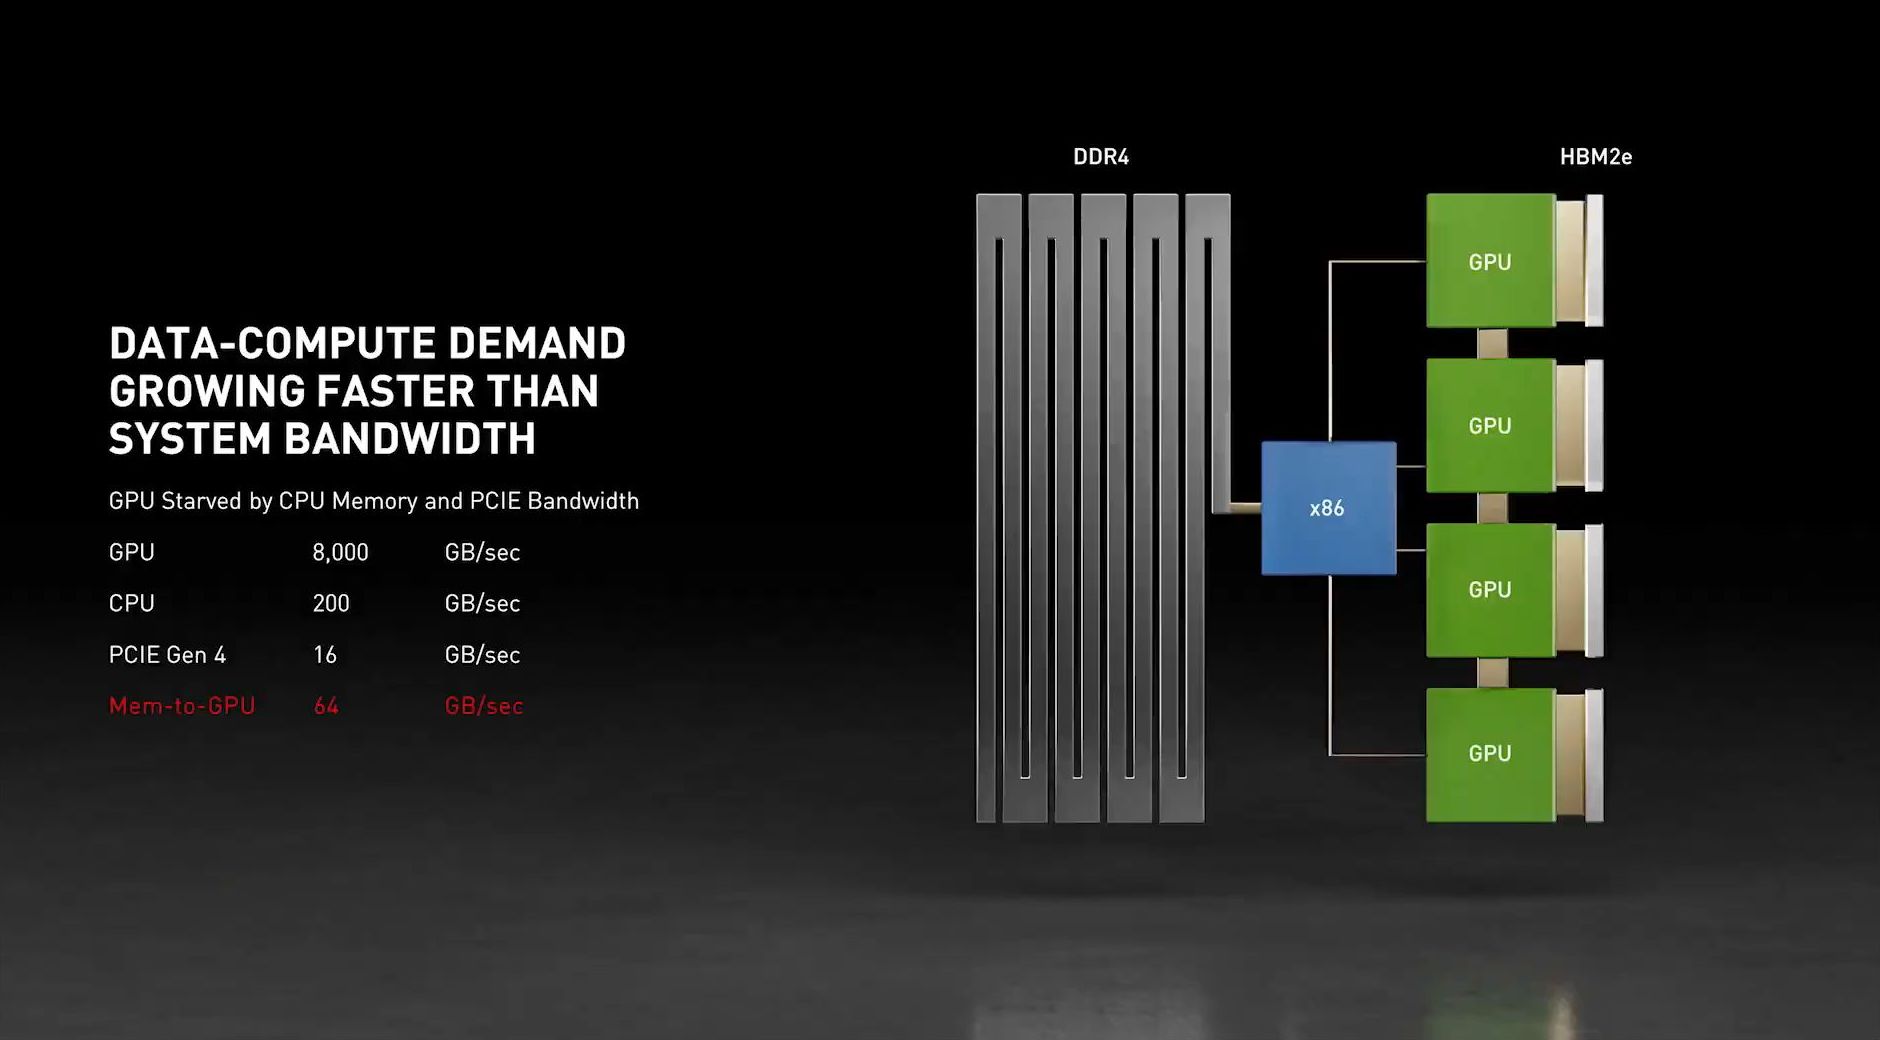 NVIDIA Announces CPU for Giant AI and High Performance Computing